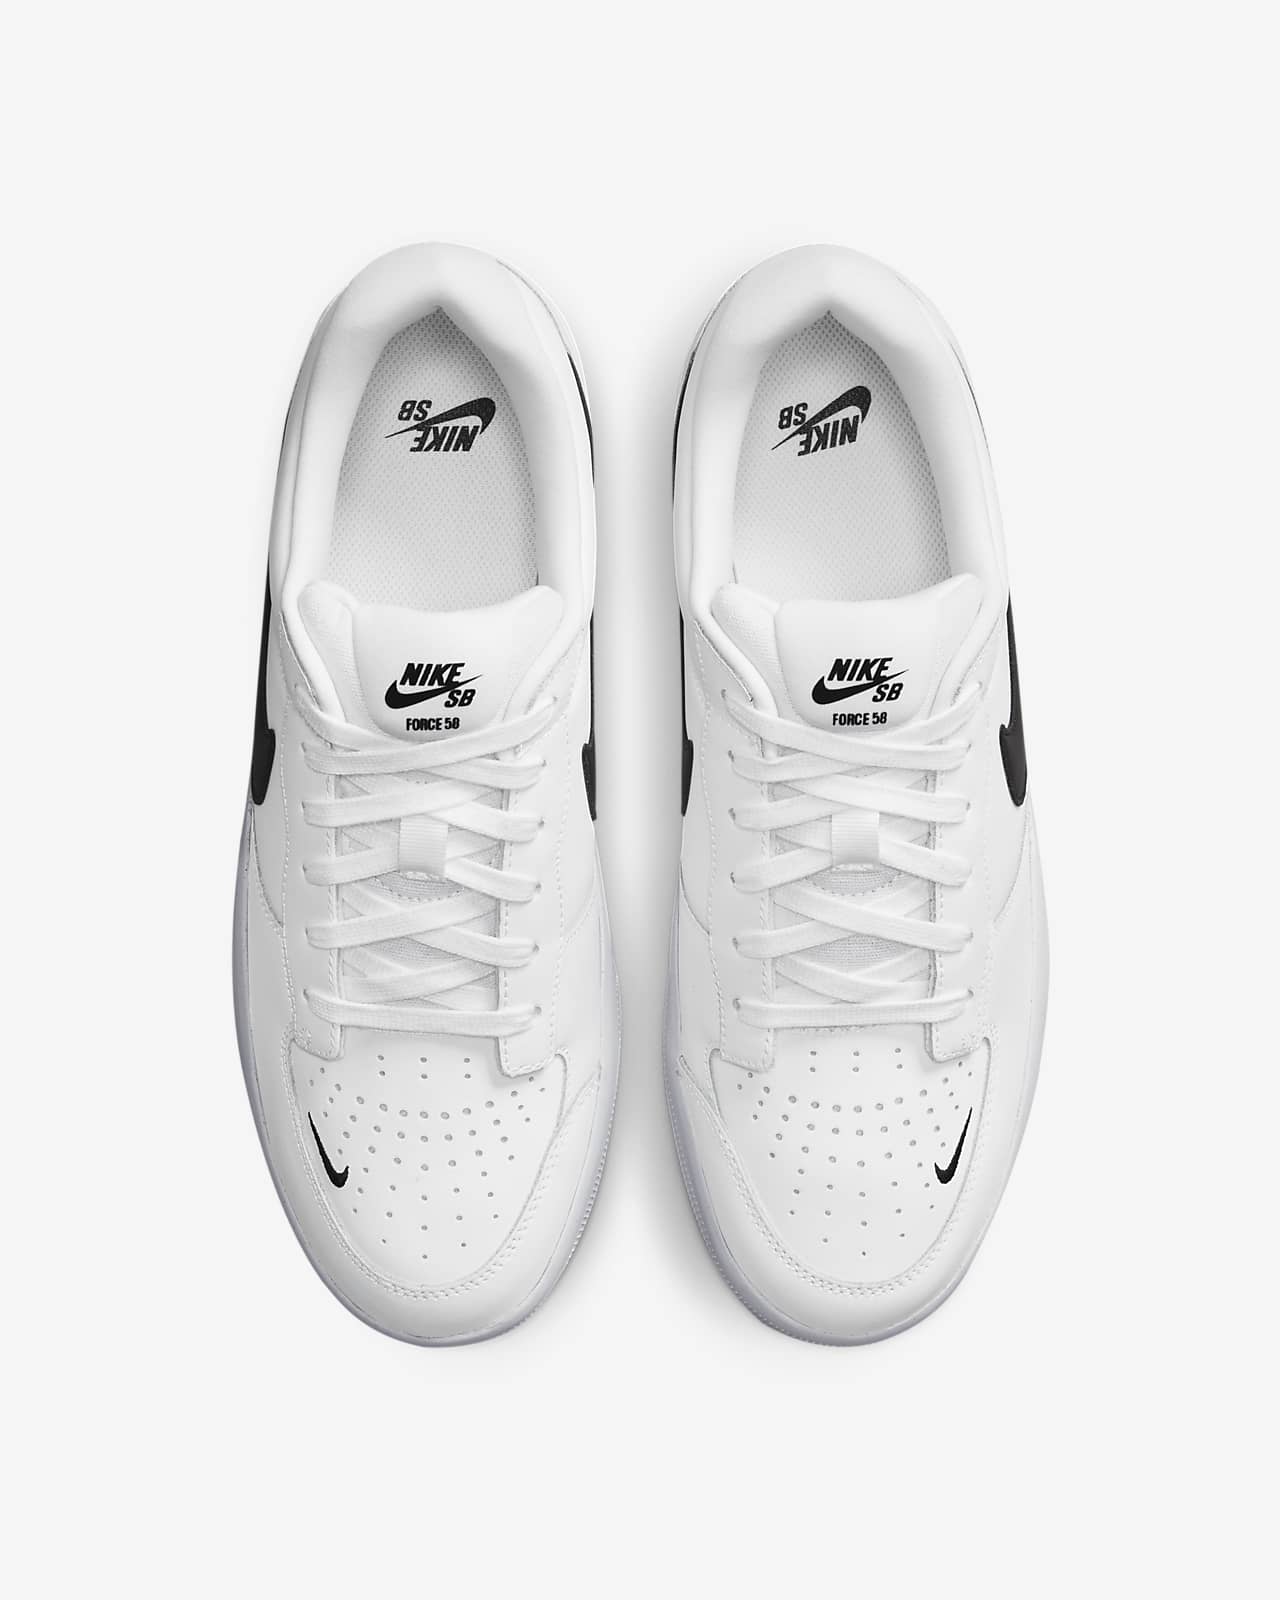 Nike SB Force black and white nike skate shoes 58 Premium Skate Shoes. Nike.com